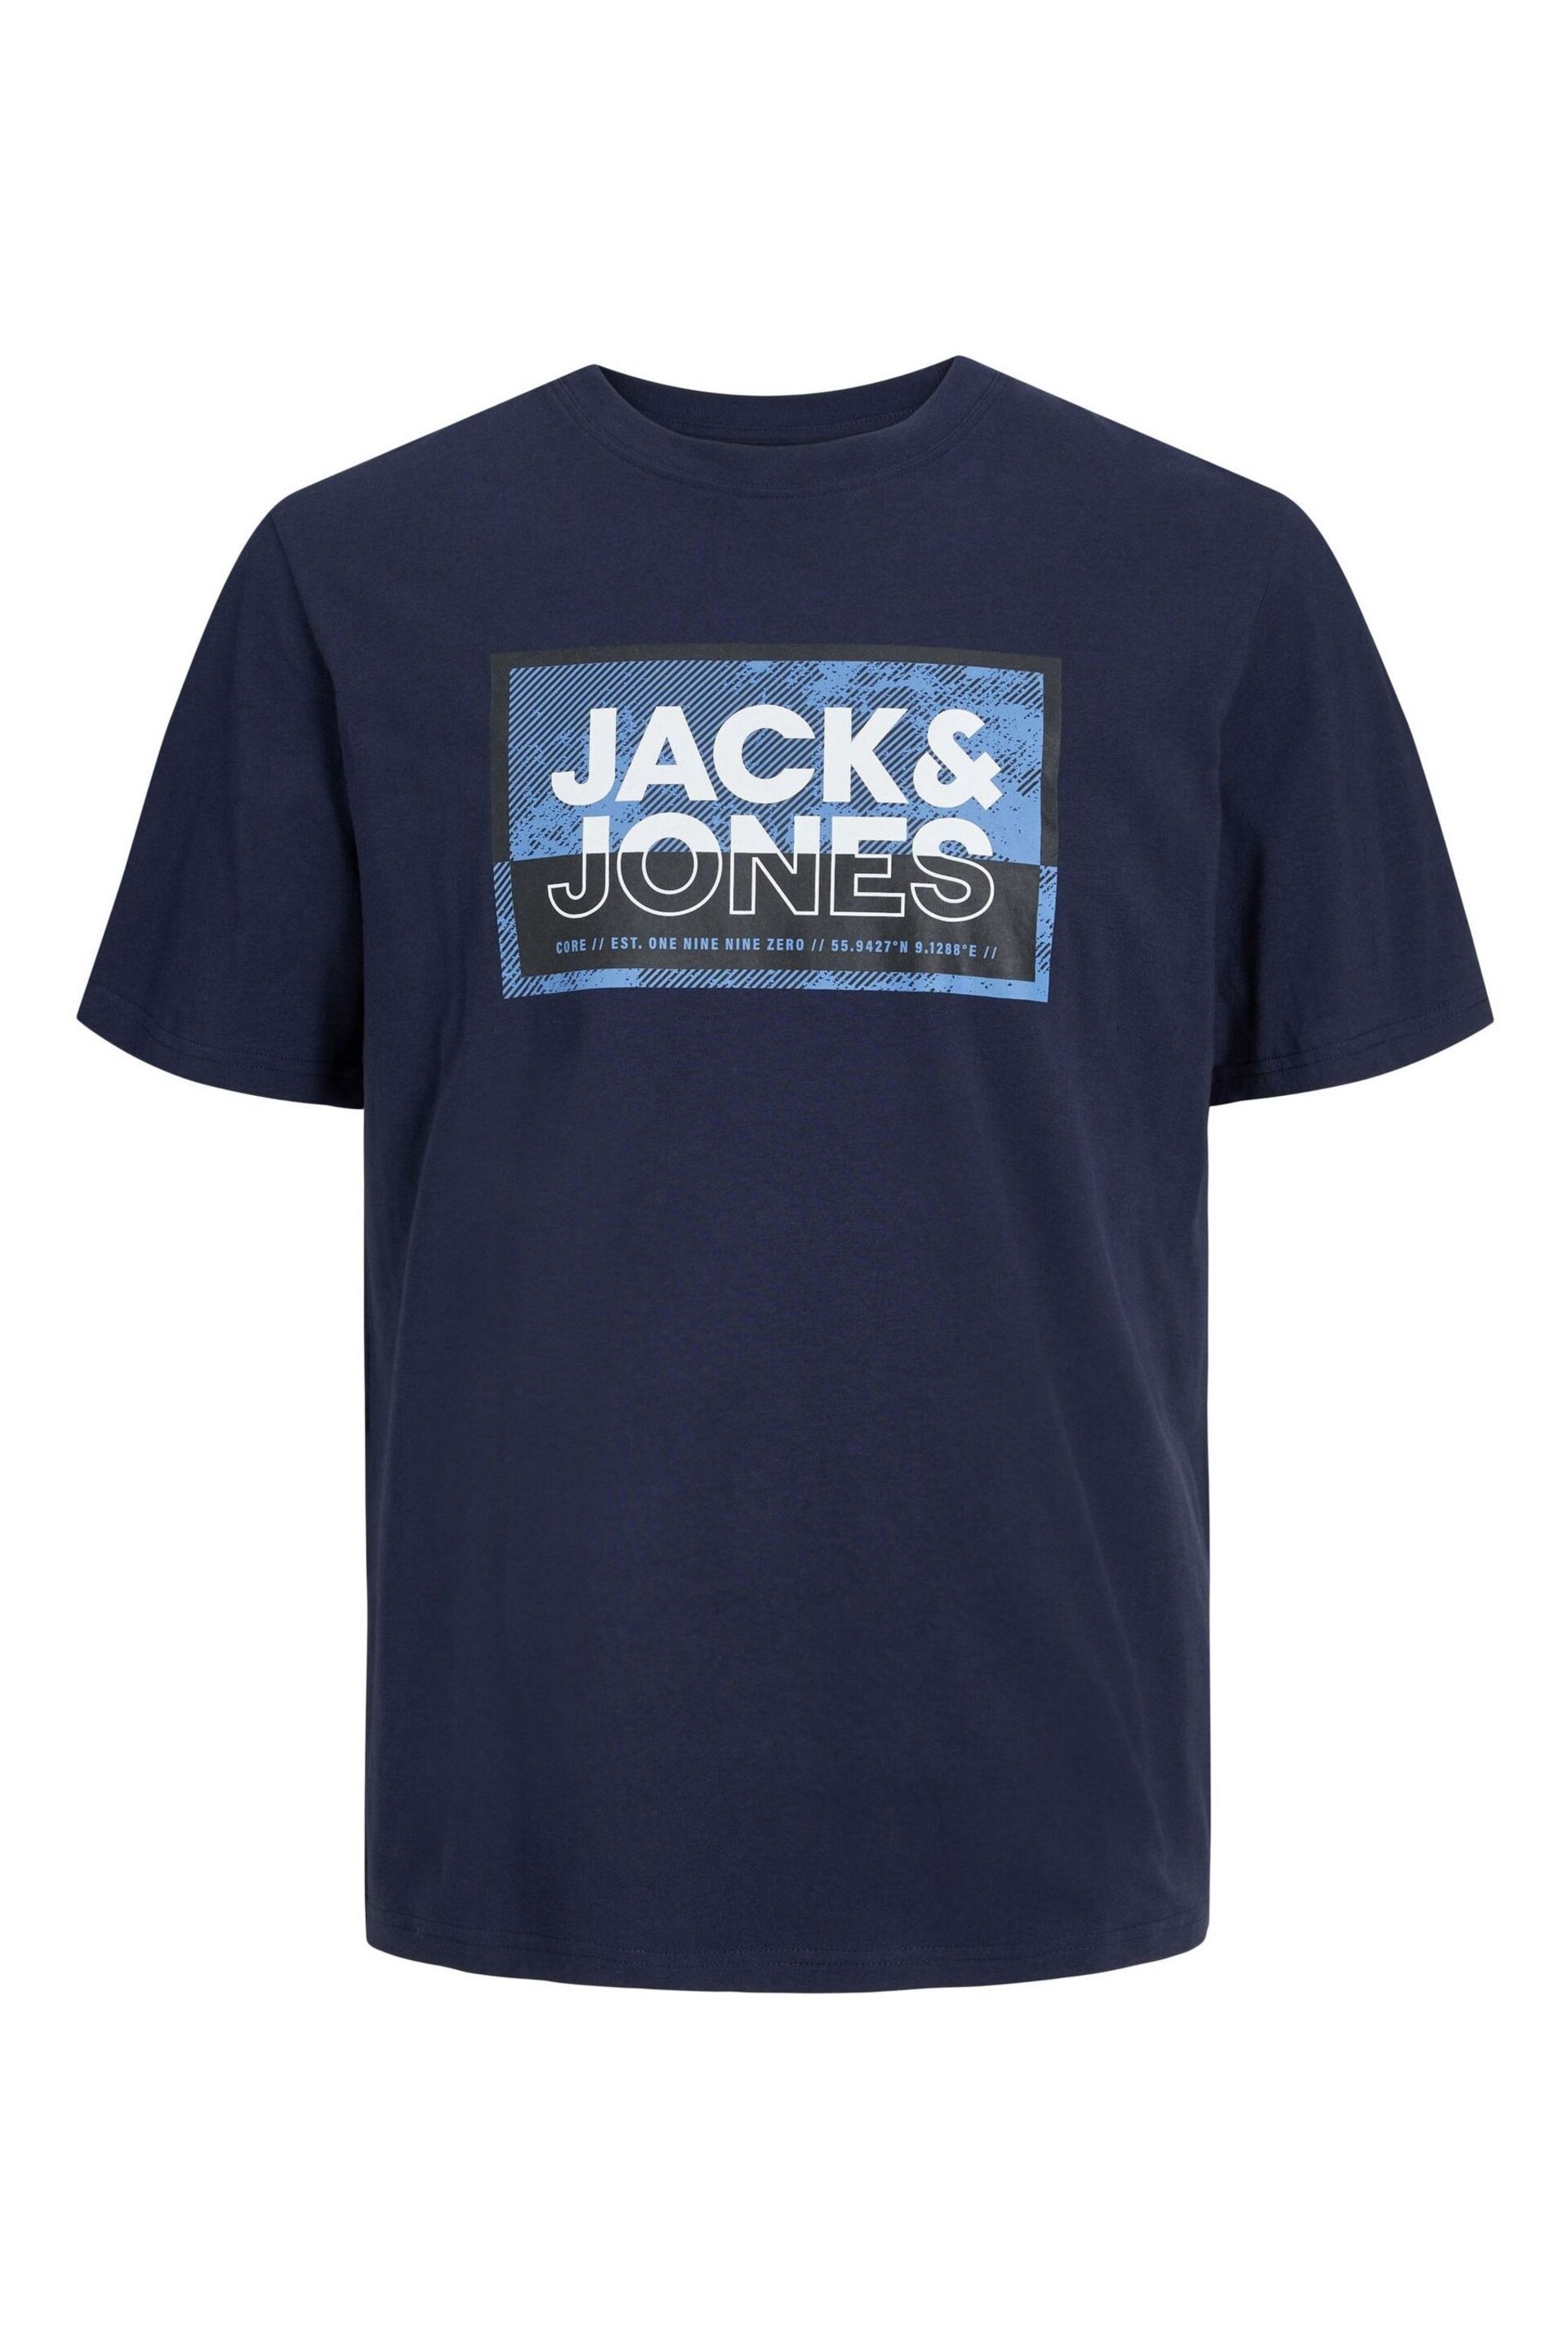 JACK & JONES JUNIOR Blue Crew Neck T-Shirts Pack - Image 3 of 3